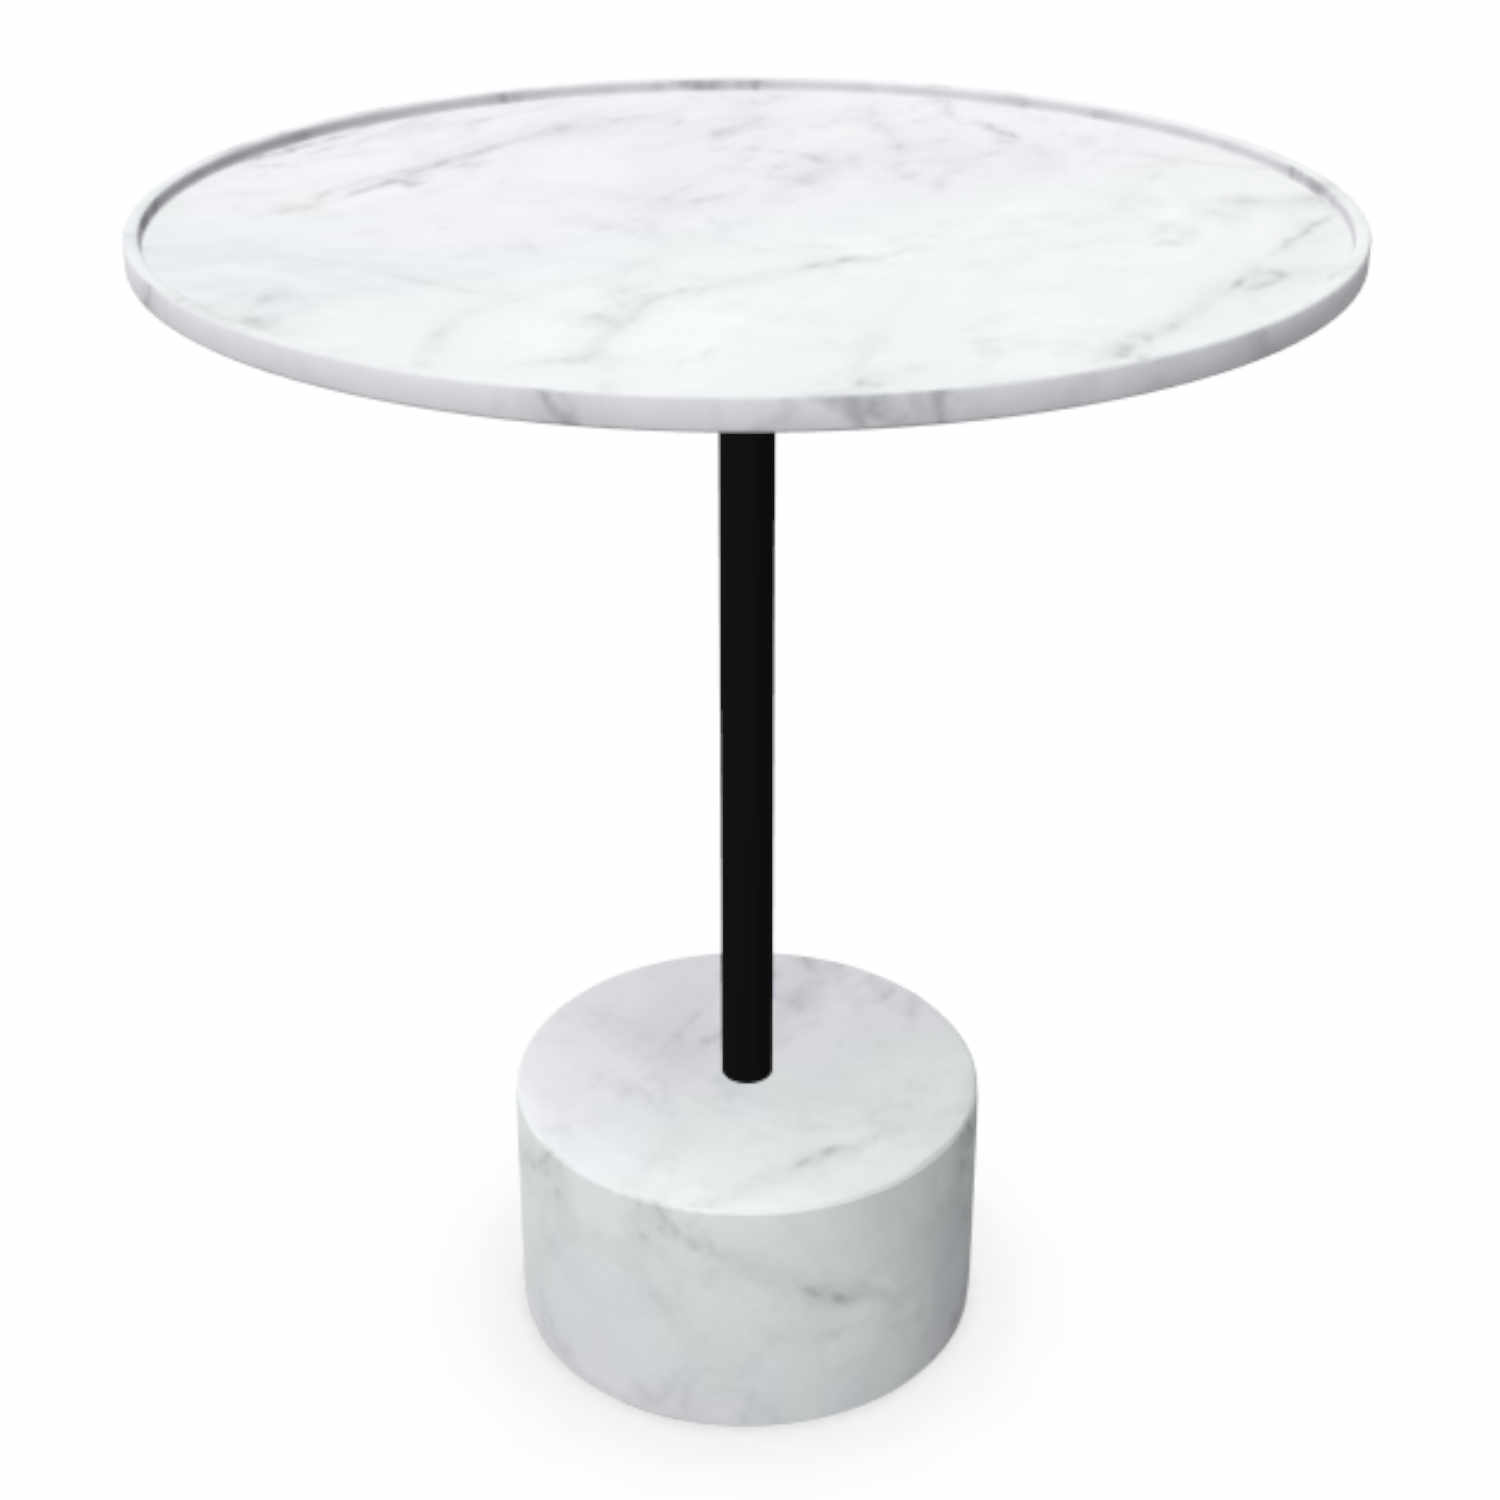 9 Table 194 Beistelltisch, Grösse h. 55 x d. 40 cm, Basis / Platte marmor carrara weiss / platte alu & glas kaffee von Cassina